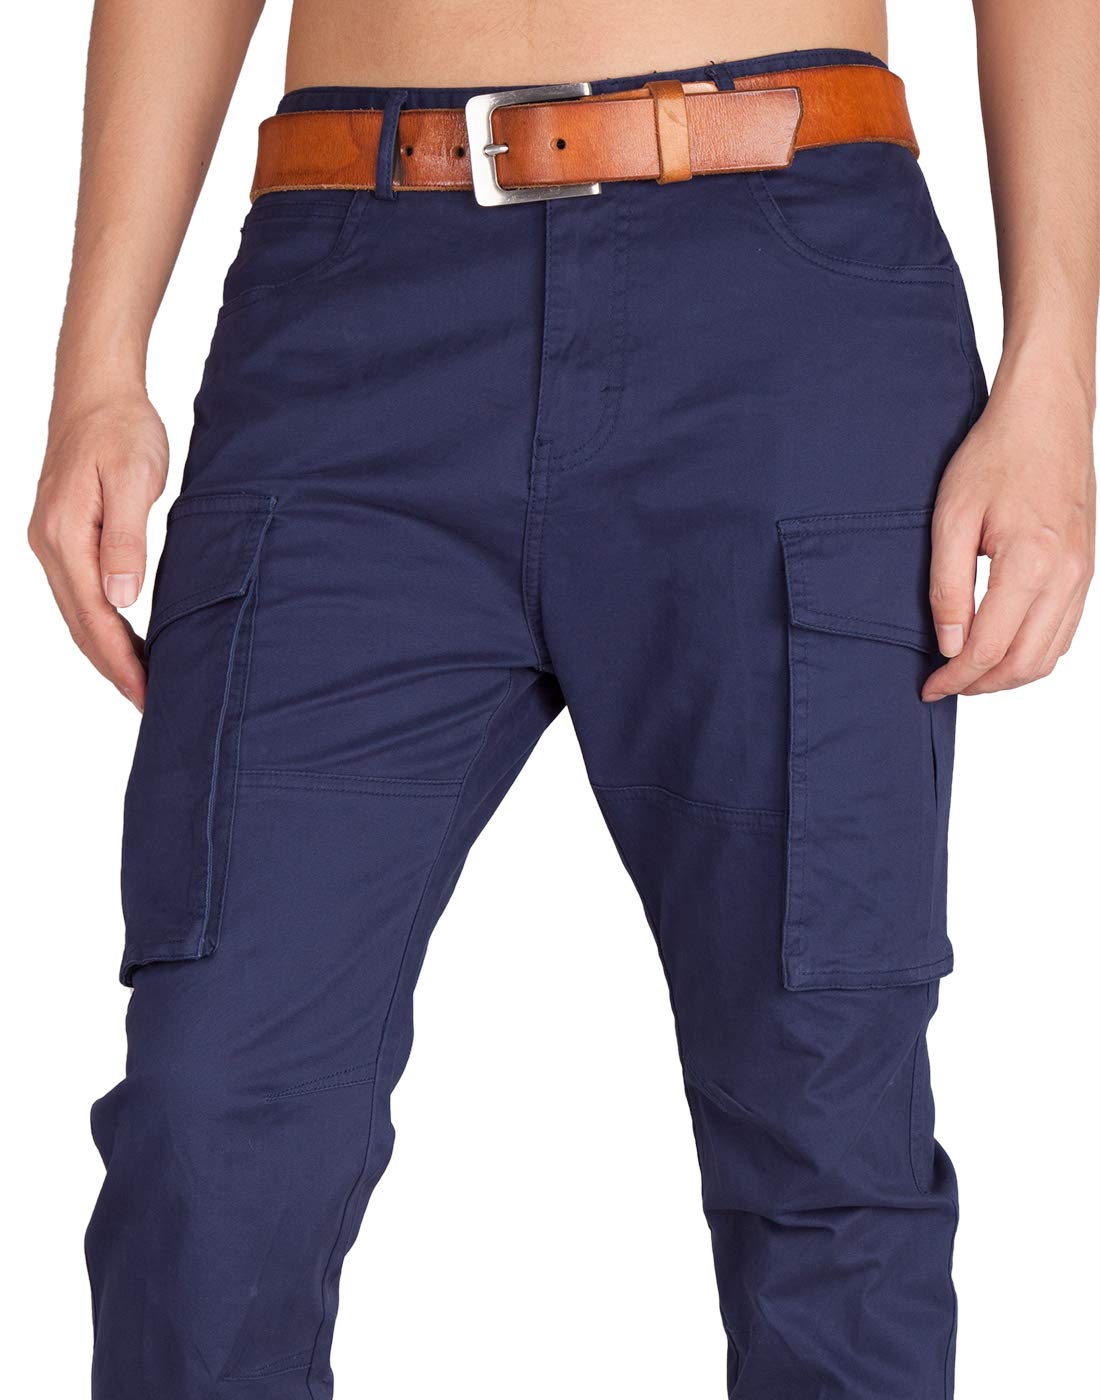 Men's Navy Blue Cargo Flat Pants – Ash and Bryan